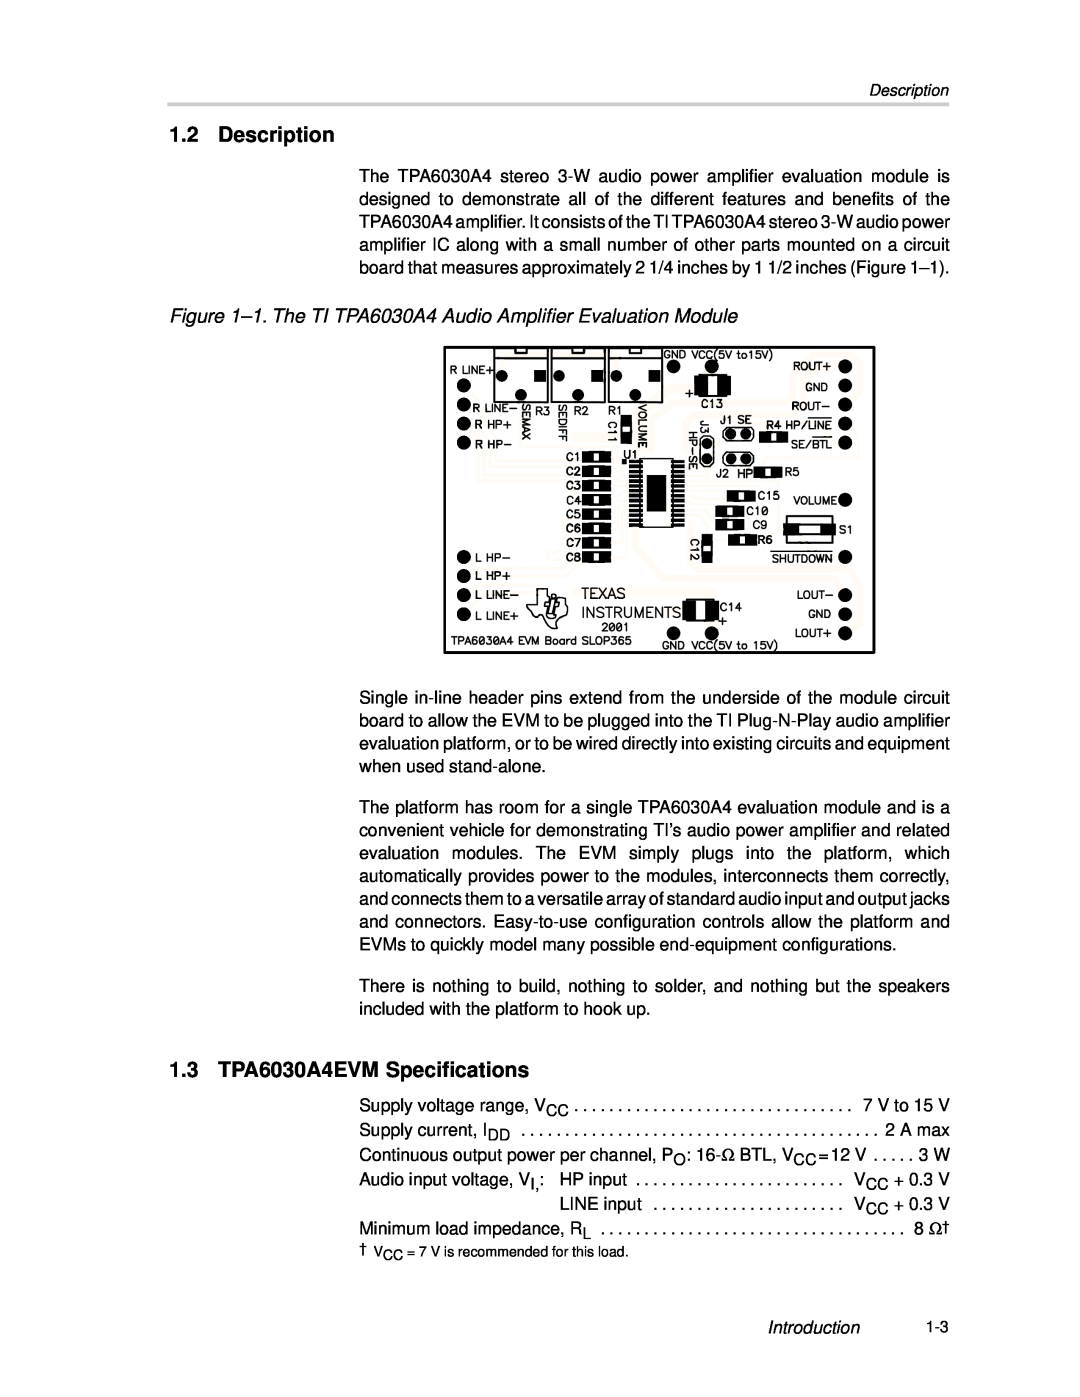 Texas Instruments manual Description, 1.3 TPA6030A4EVM Specifications, Introduction 